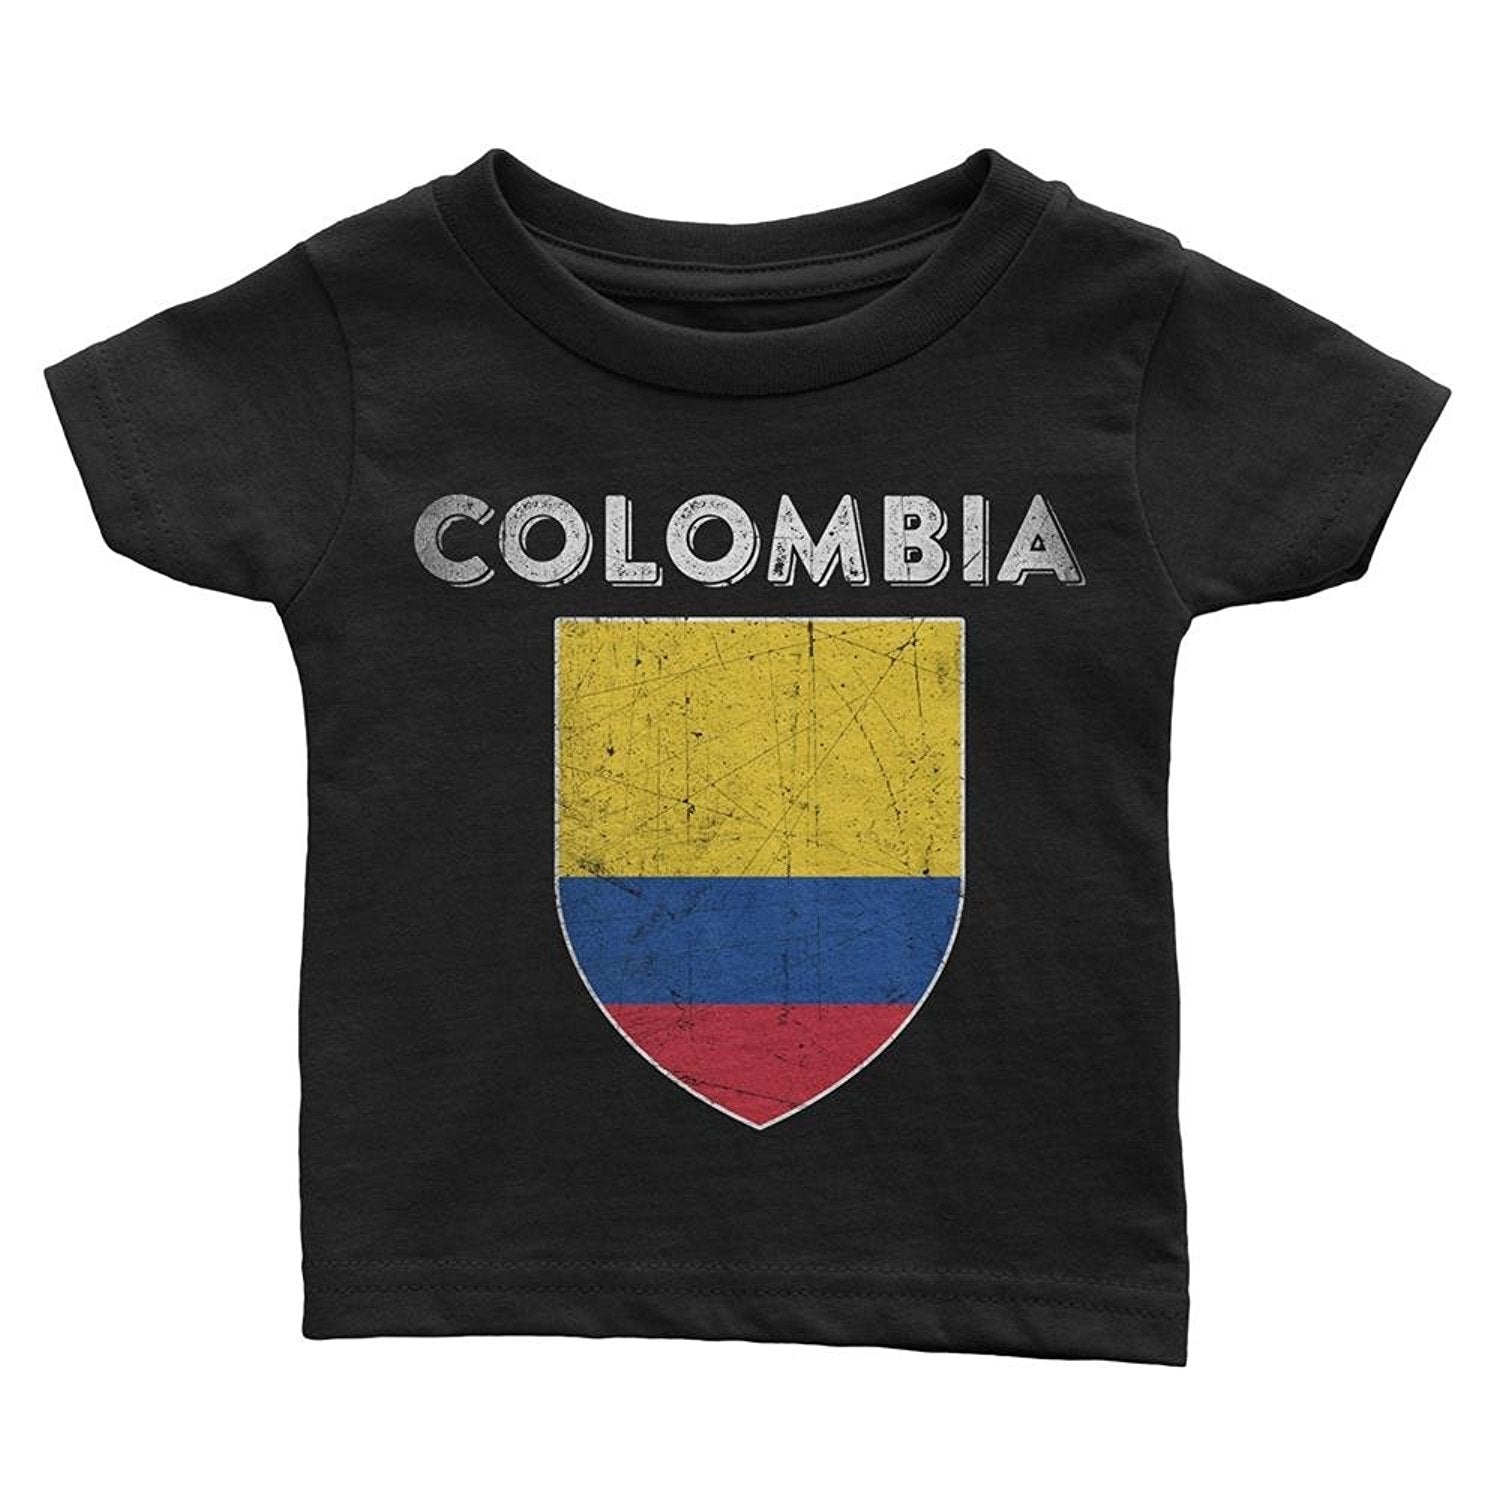 Colombia Flag Tee T-Shirt Infant Baby Shirt Boys II